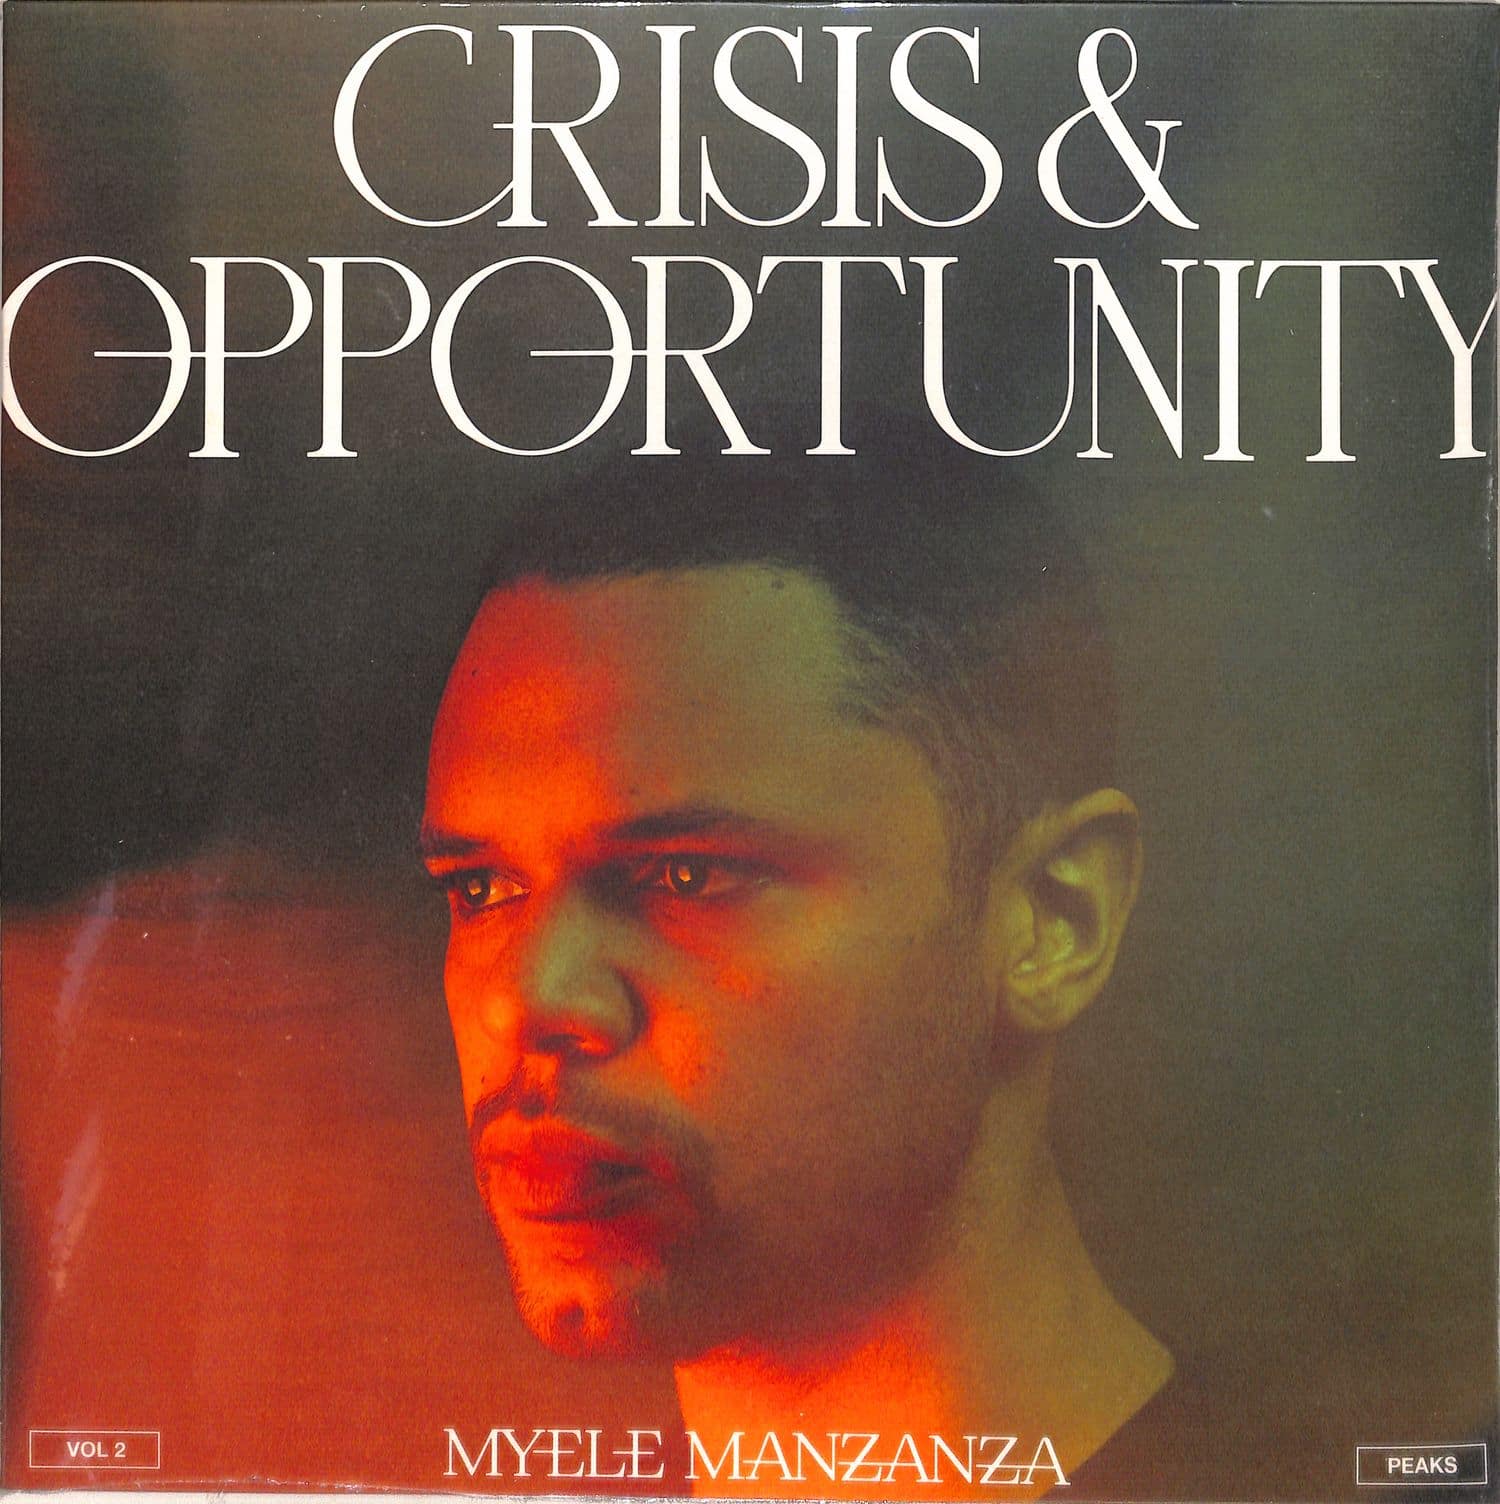 Myele Manzanza - CRISIS & OPPORTUNITY, VOL. 2 - PEAKS 